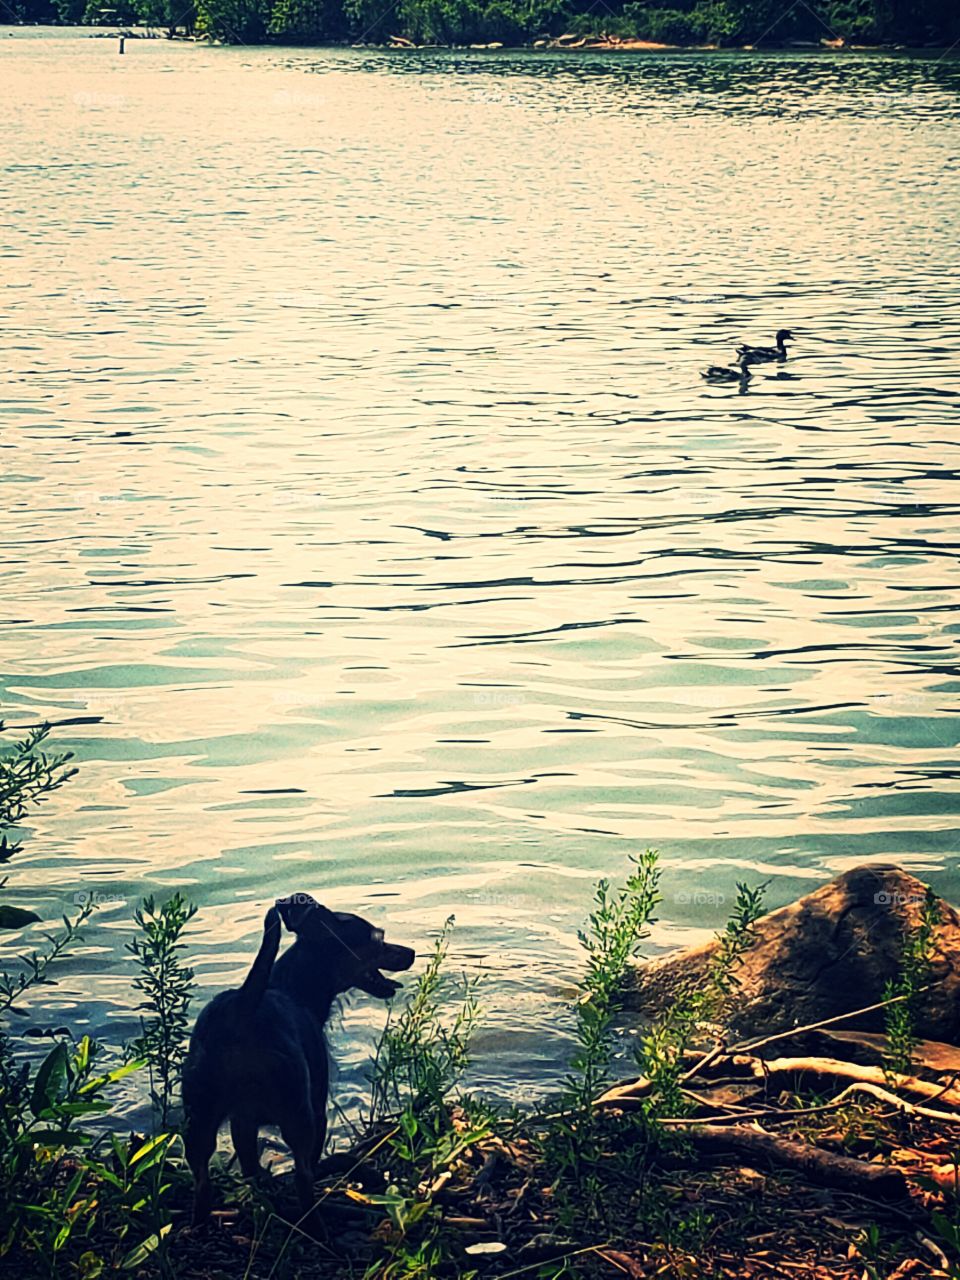 dog
lake
water
ducks
summer